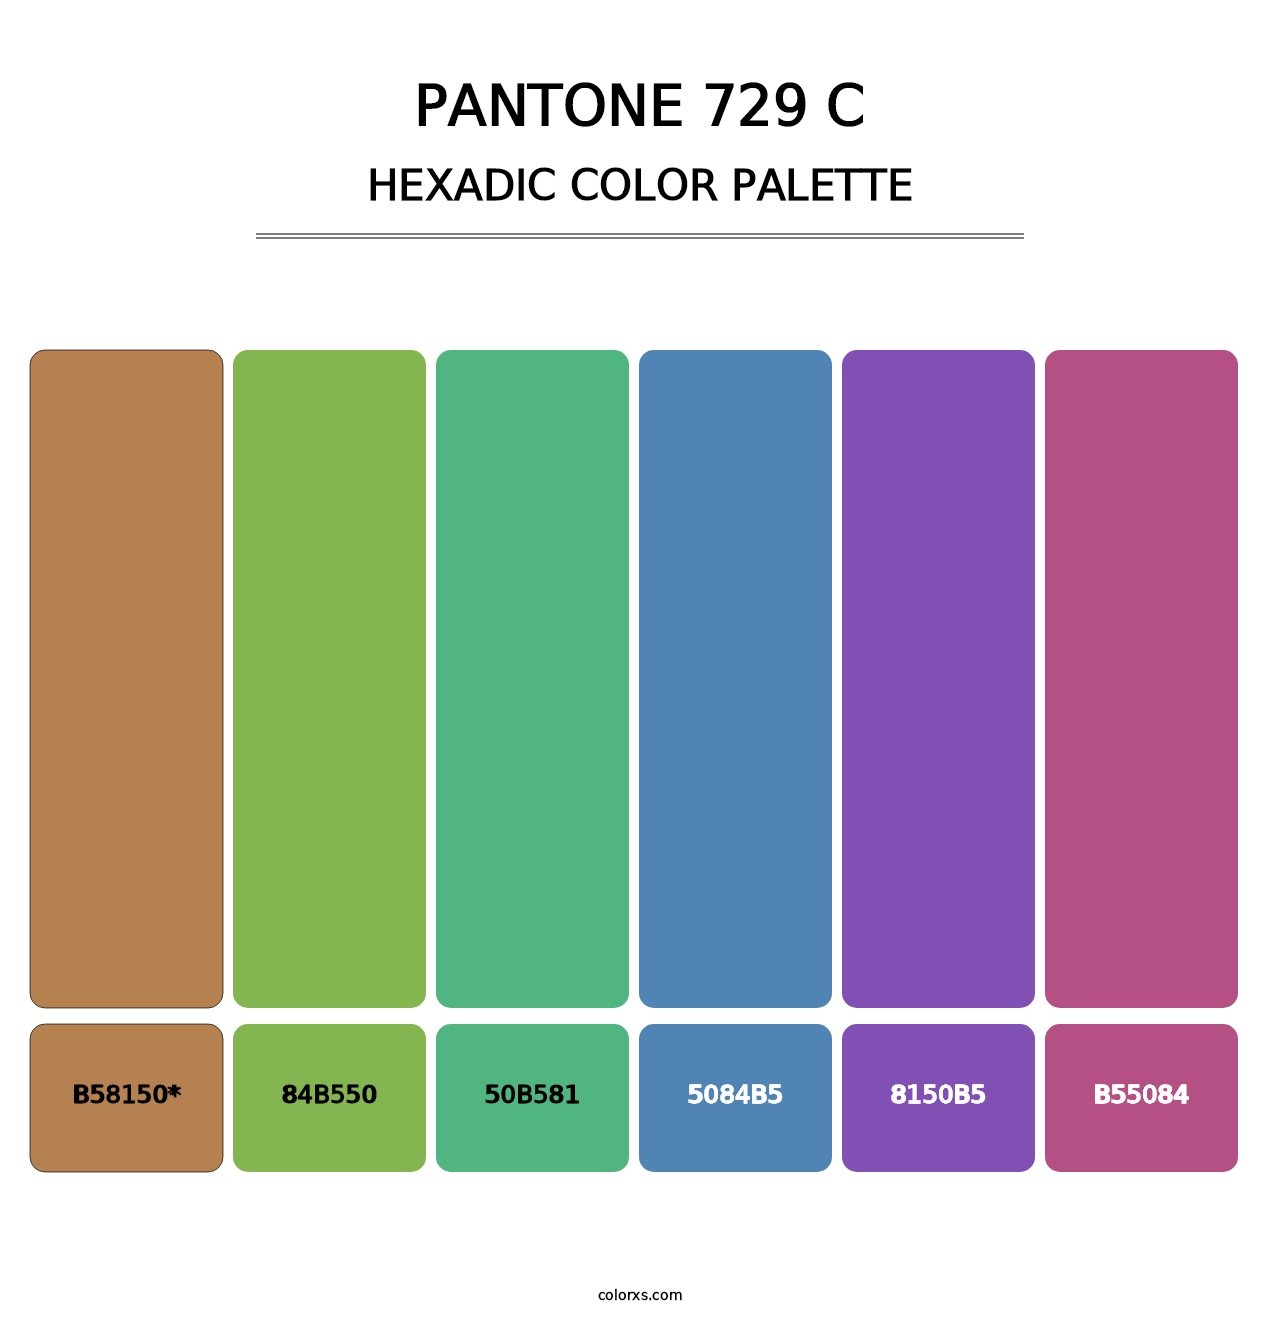 PANTONE 729 C - Hexadic Color Palette